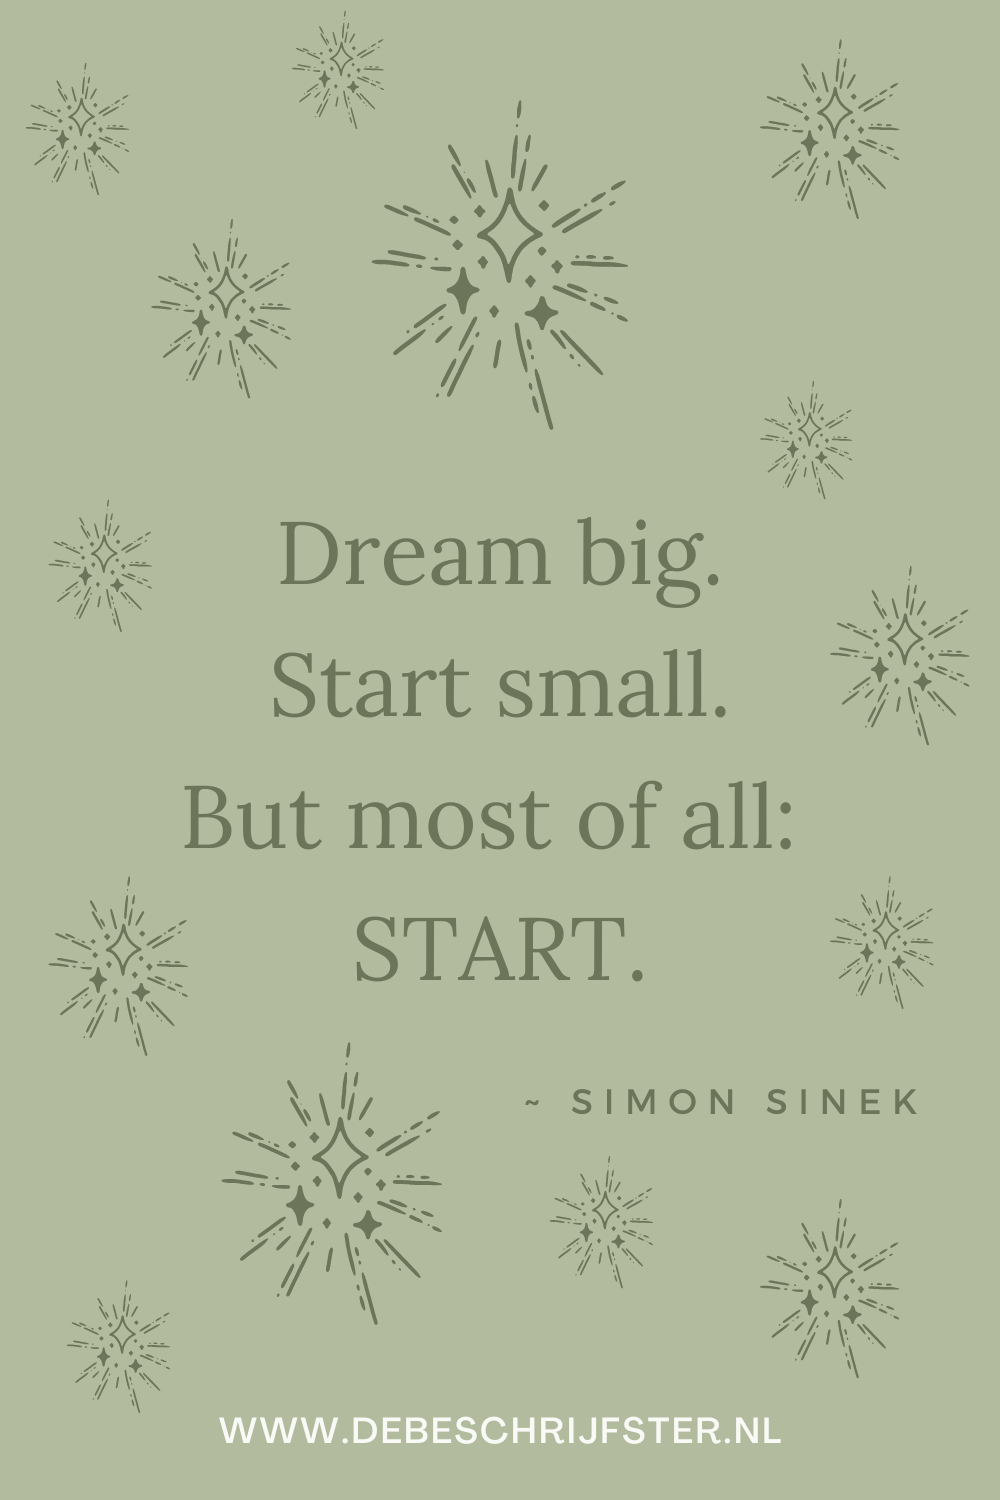 Dream big. Start small. But most of all: start. Simon Sinek